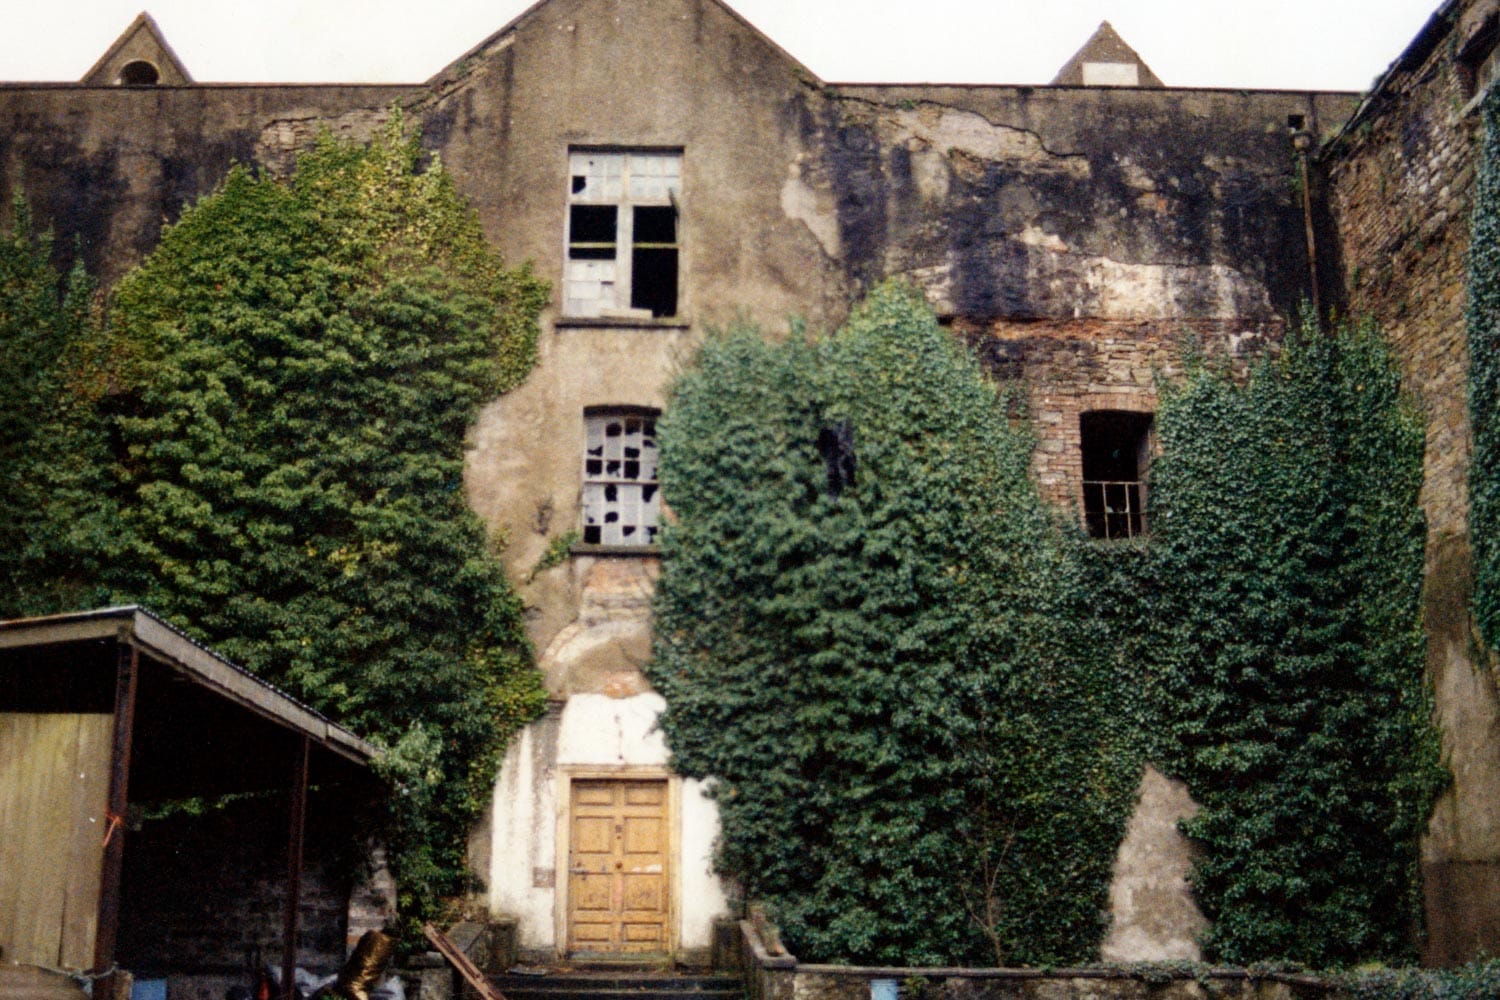 External of King House before restoration